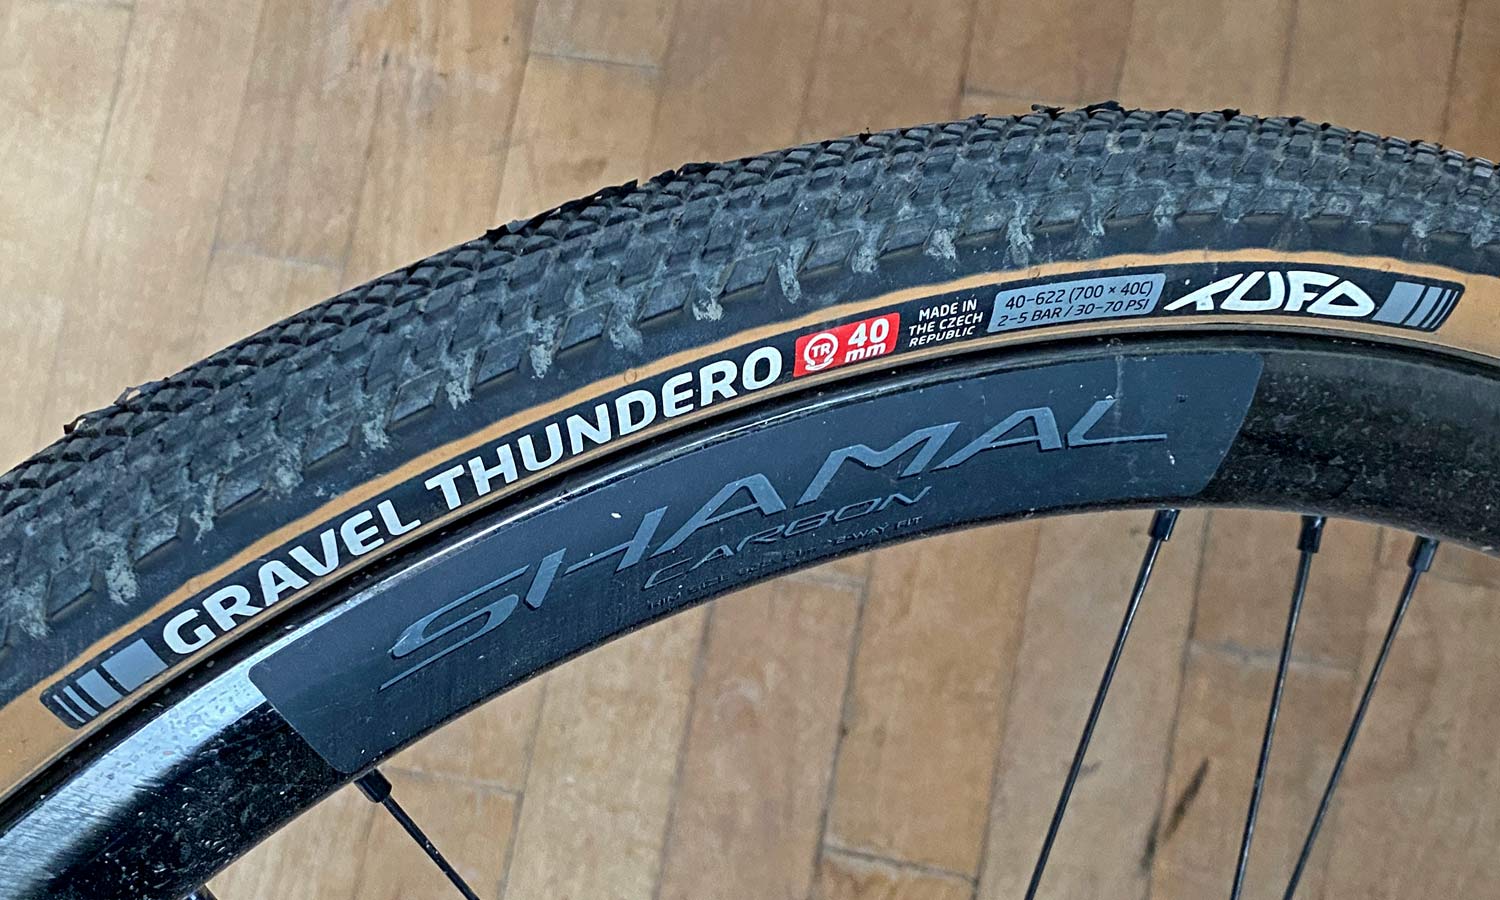 Tufo Gravel Thundero tubeless gravel bike tires, affordable durable mixed surface grip review, natural tan sidewall